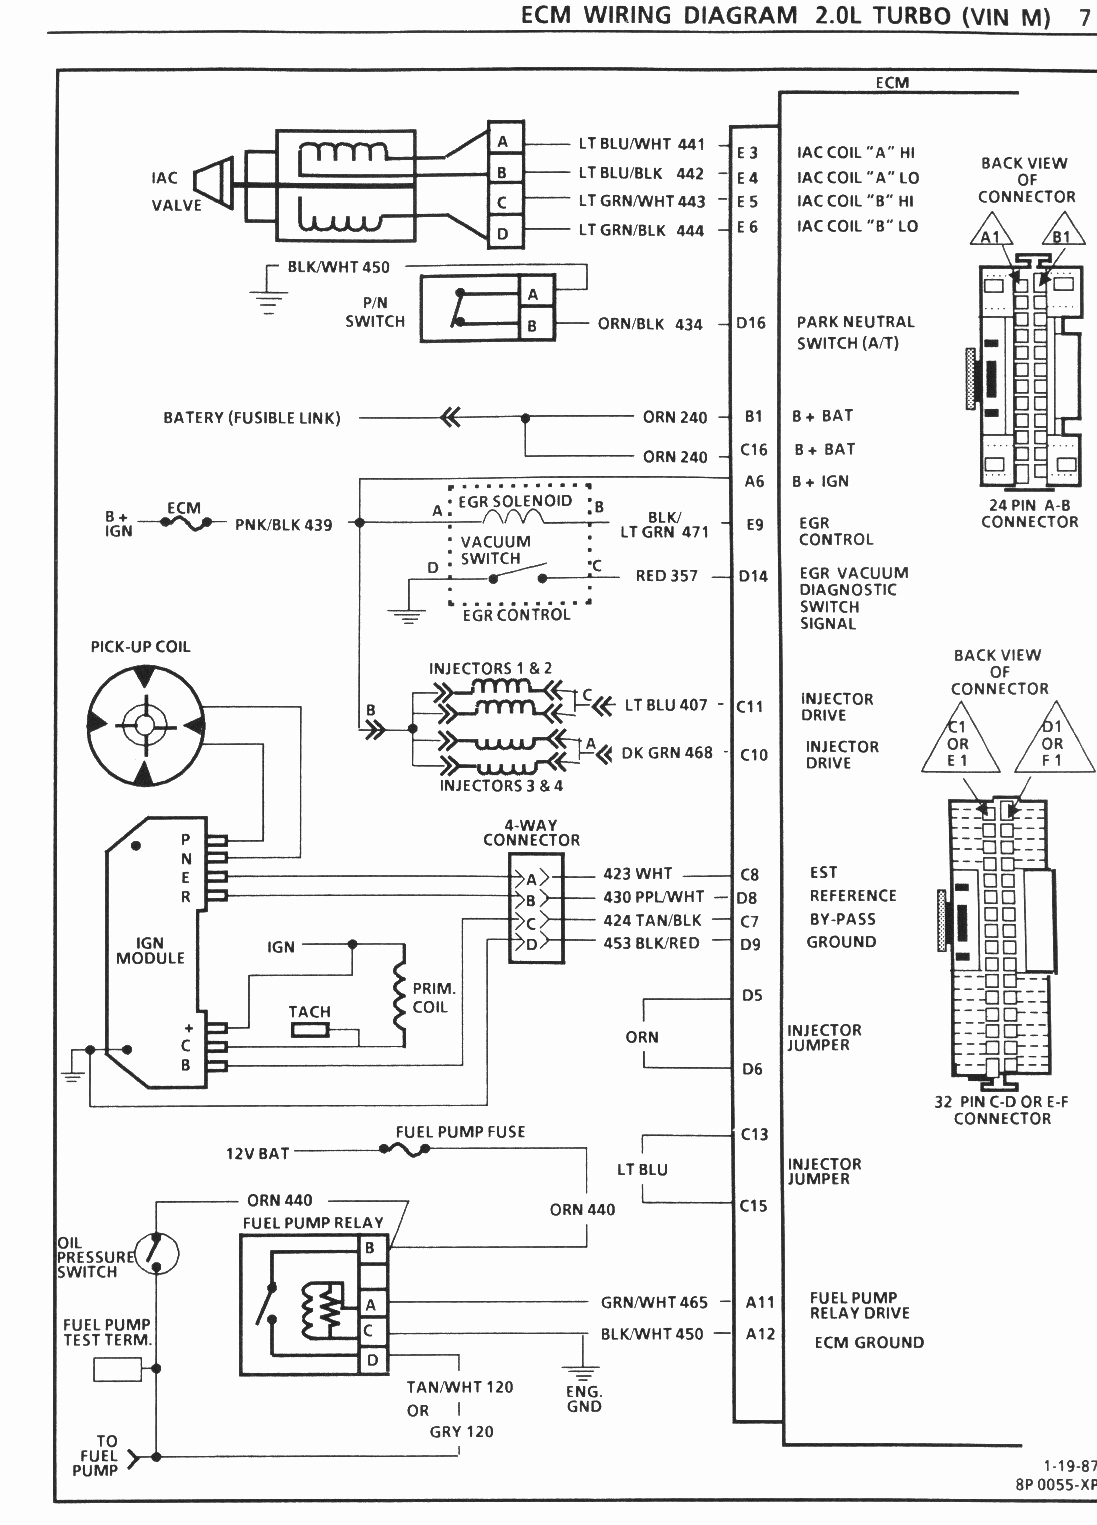 Detroit Sel Series 60 Ecm Wiring Diagram | Wiring Diagram - Detroit Series 60 Ecm Wiring Diagram